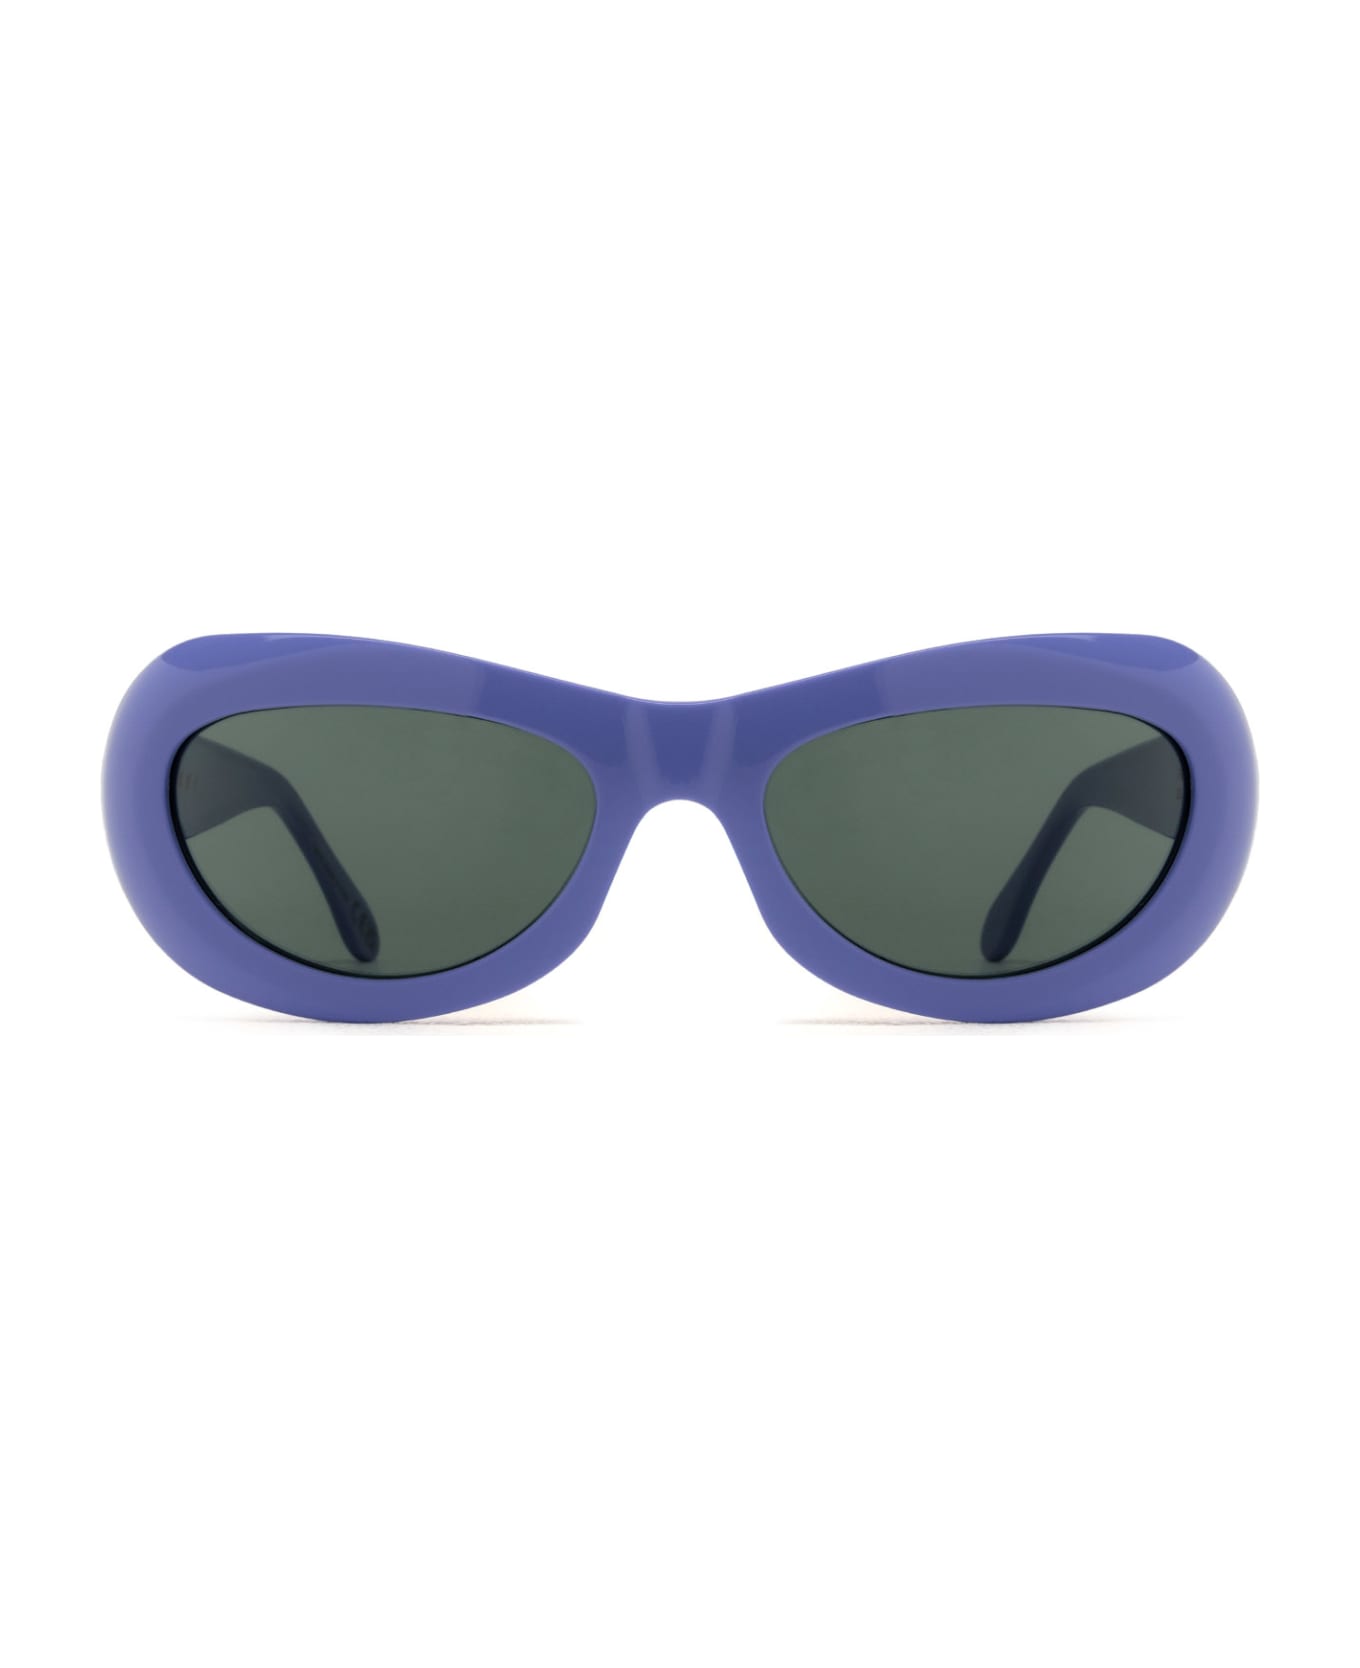 Marni Eyewear Field Of Rushes Lilac Sunglasses - Lilac